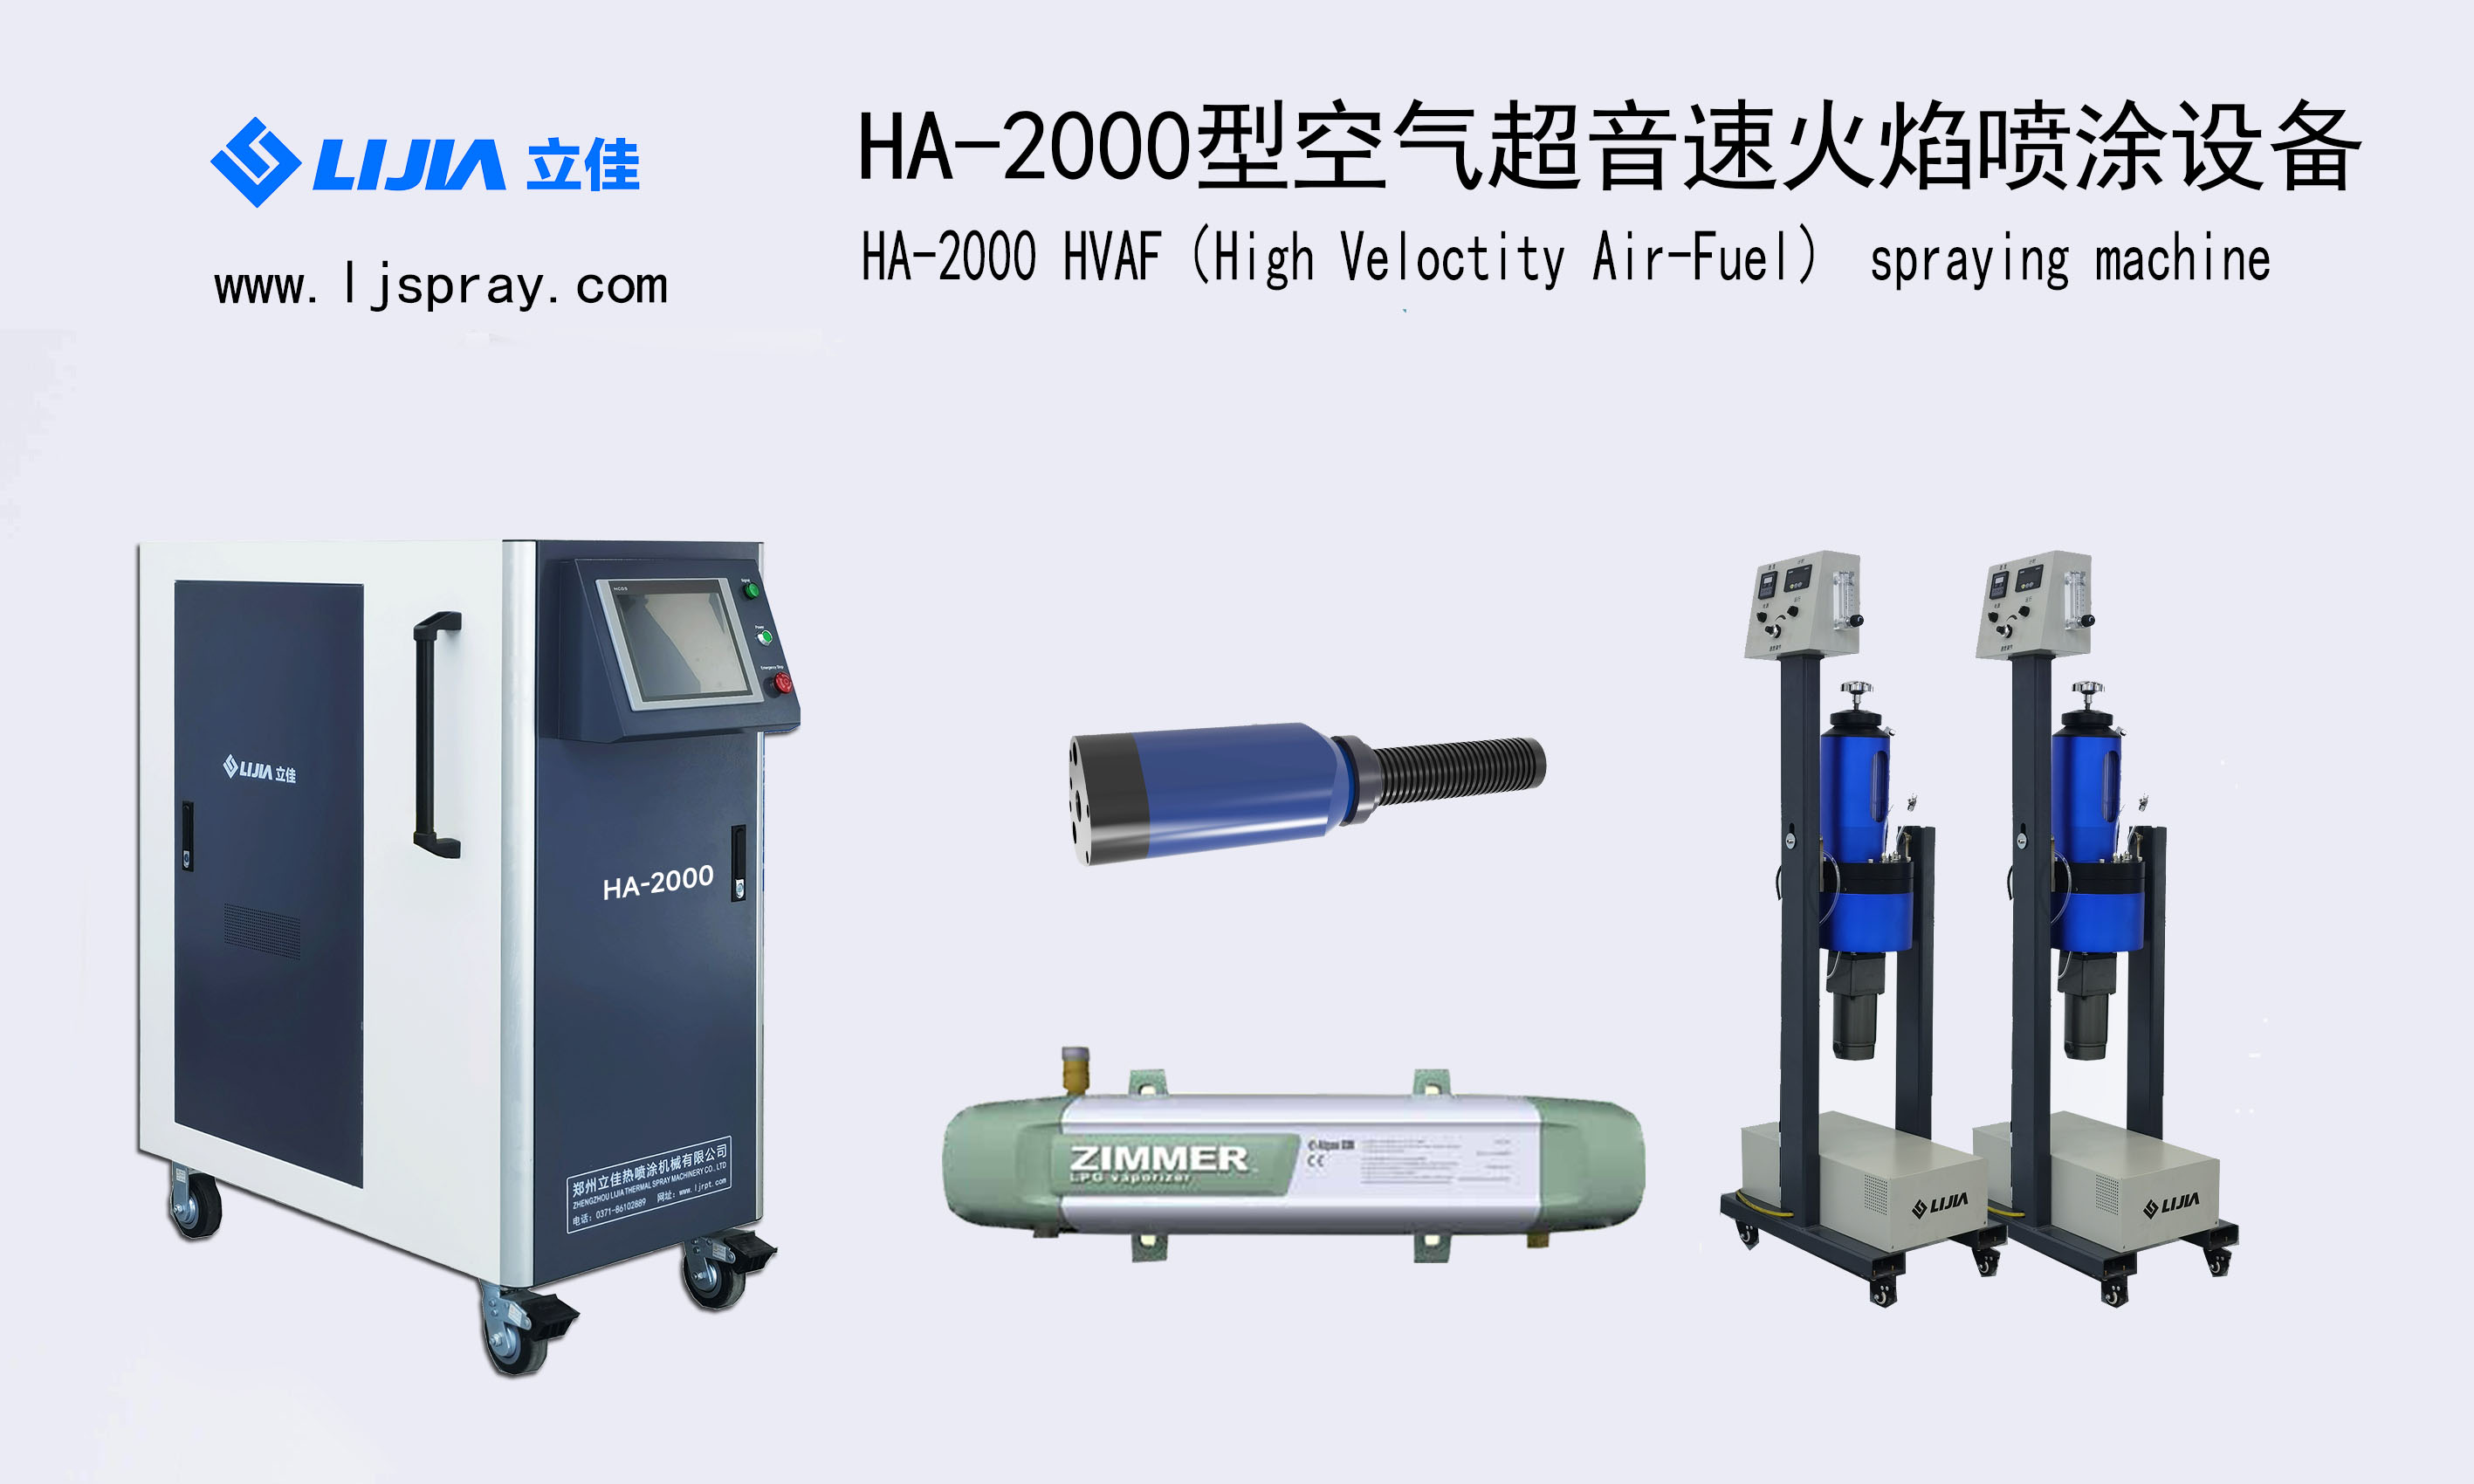 HA-2000空氣超音速噴涂設備